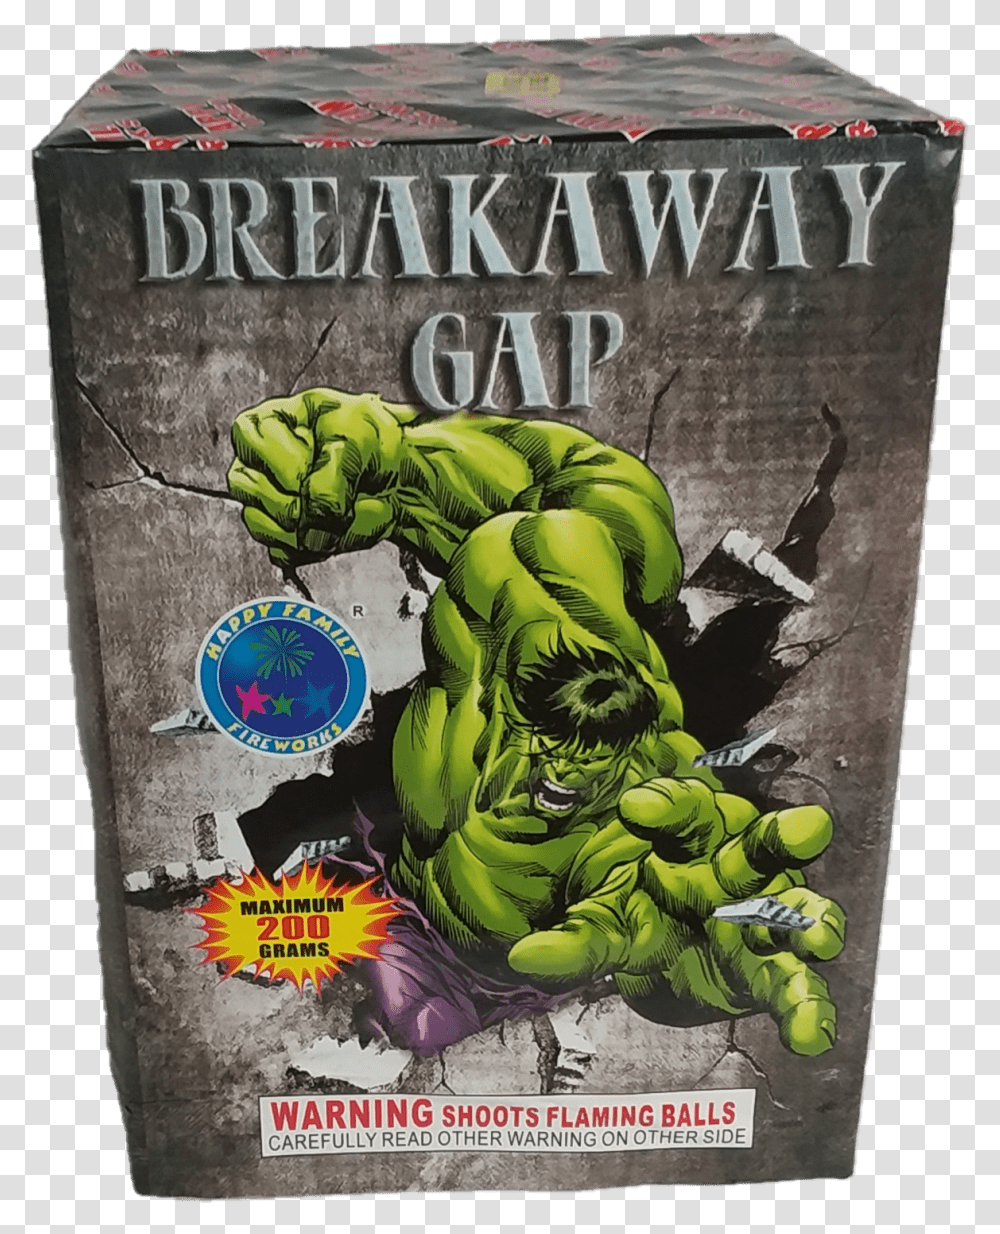 Breakaway Gap By Fireworks Plus Hulk, Batman, Text, Poster, Advertisement Transparent Png